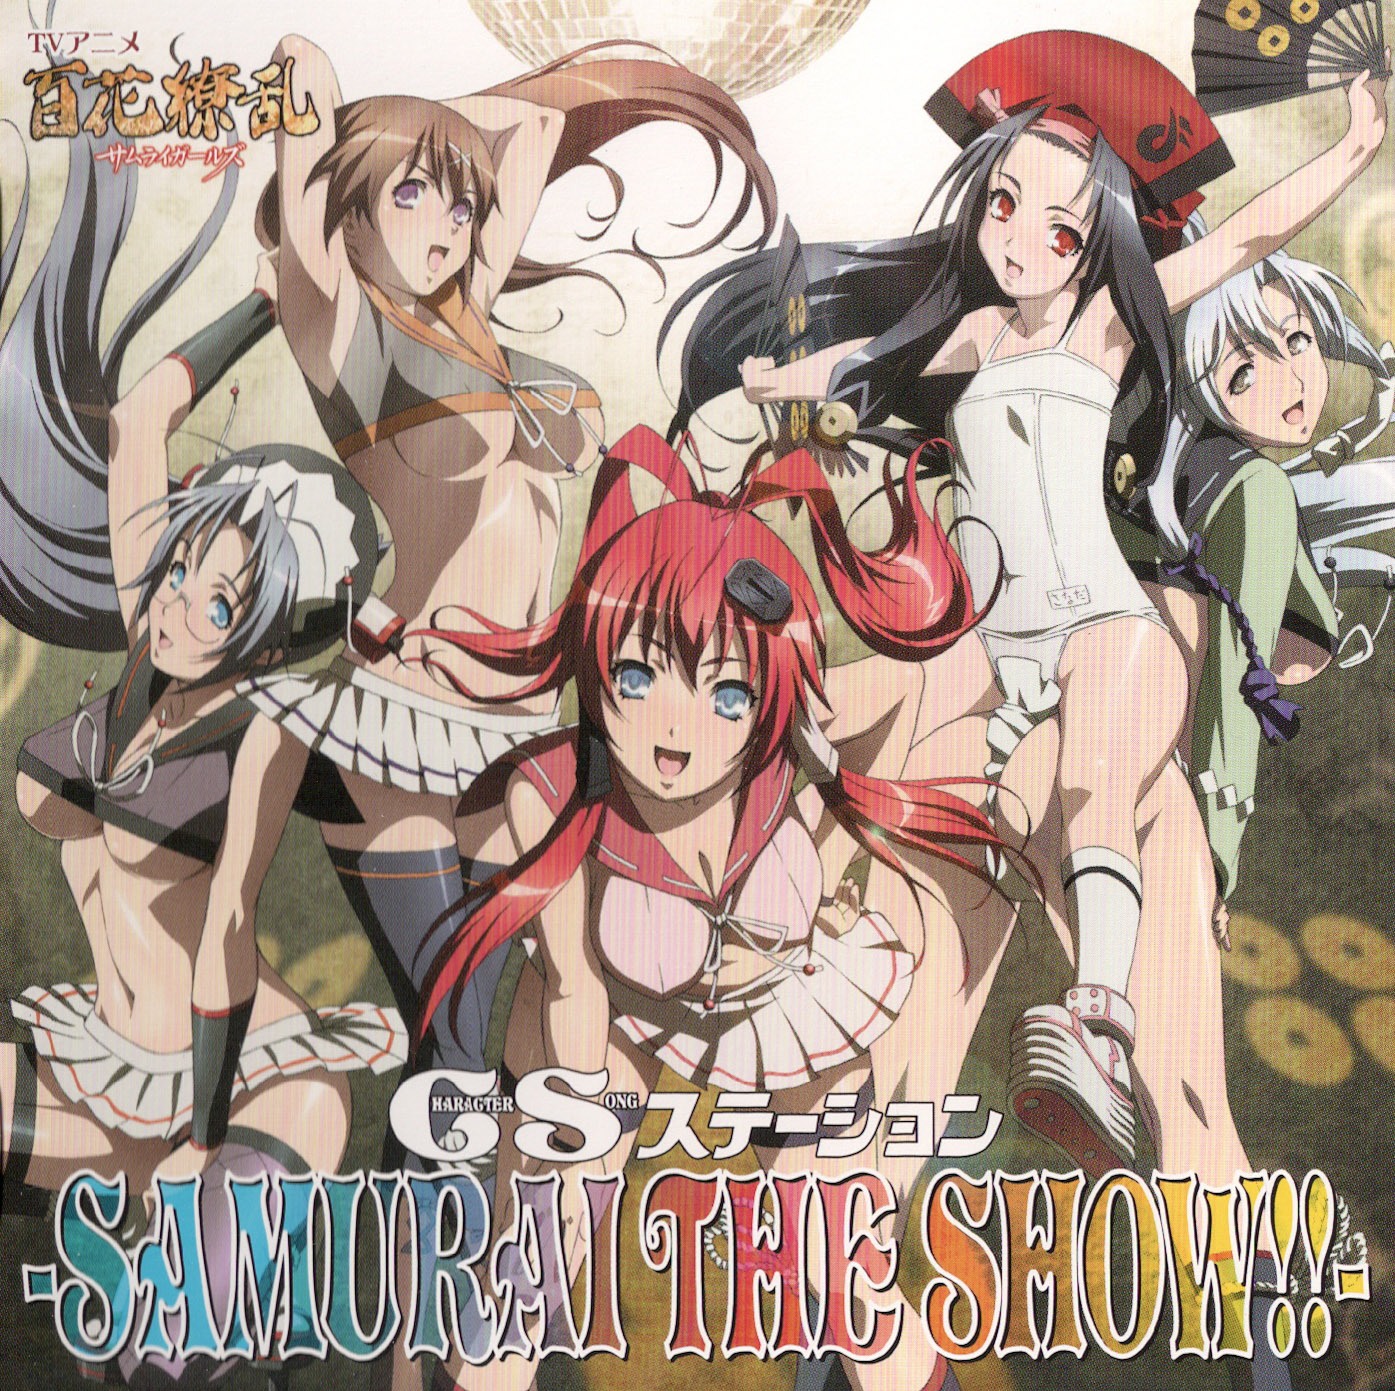 https://blogger.googleusercontent.com/img/b/R29vZ2xl/AVvXsEjdMp4fffKE9qulHCPpMy5oC7YYBaLevvyrcD4qHTDsMnIY3sUtilWHS6hFsrq3KKZs8LFmMOS62g1izfzBmO8Q0oWvP9dCA9gl_Q5deSztG789VvM_i2LX-g-NaqPMrkk1COtwNJcvFnIS/s1600/Hyakka+Ryouran+Samurai+Girls+Character+Song+Album+-+SAMURAI+THE+SHOW%2521%2521.jpg